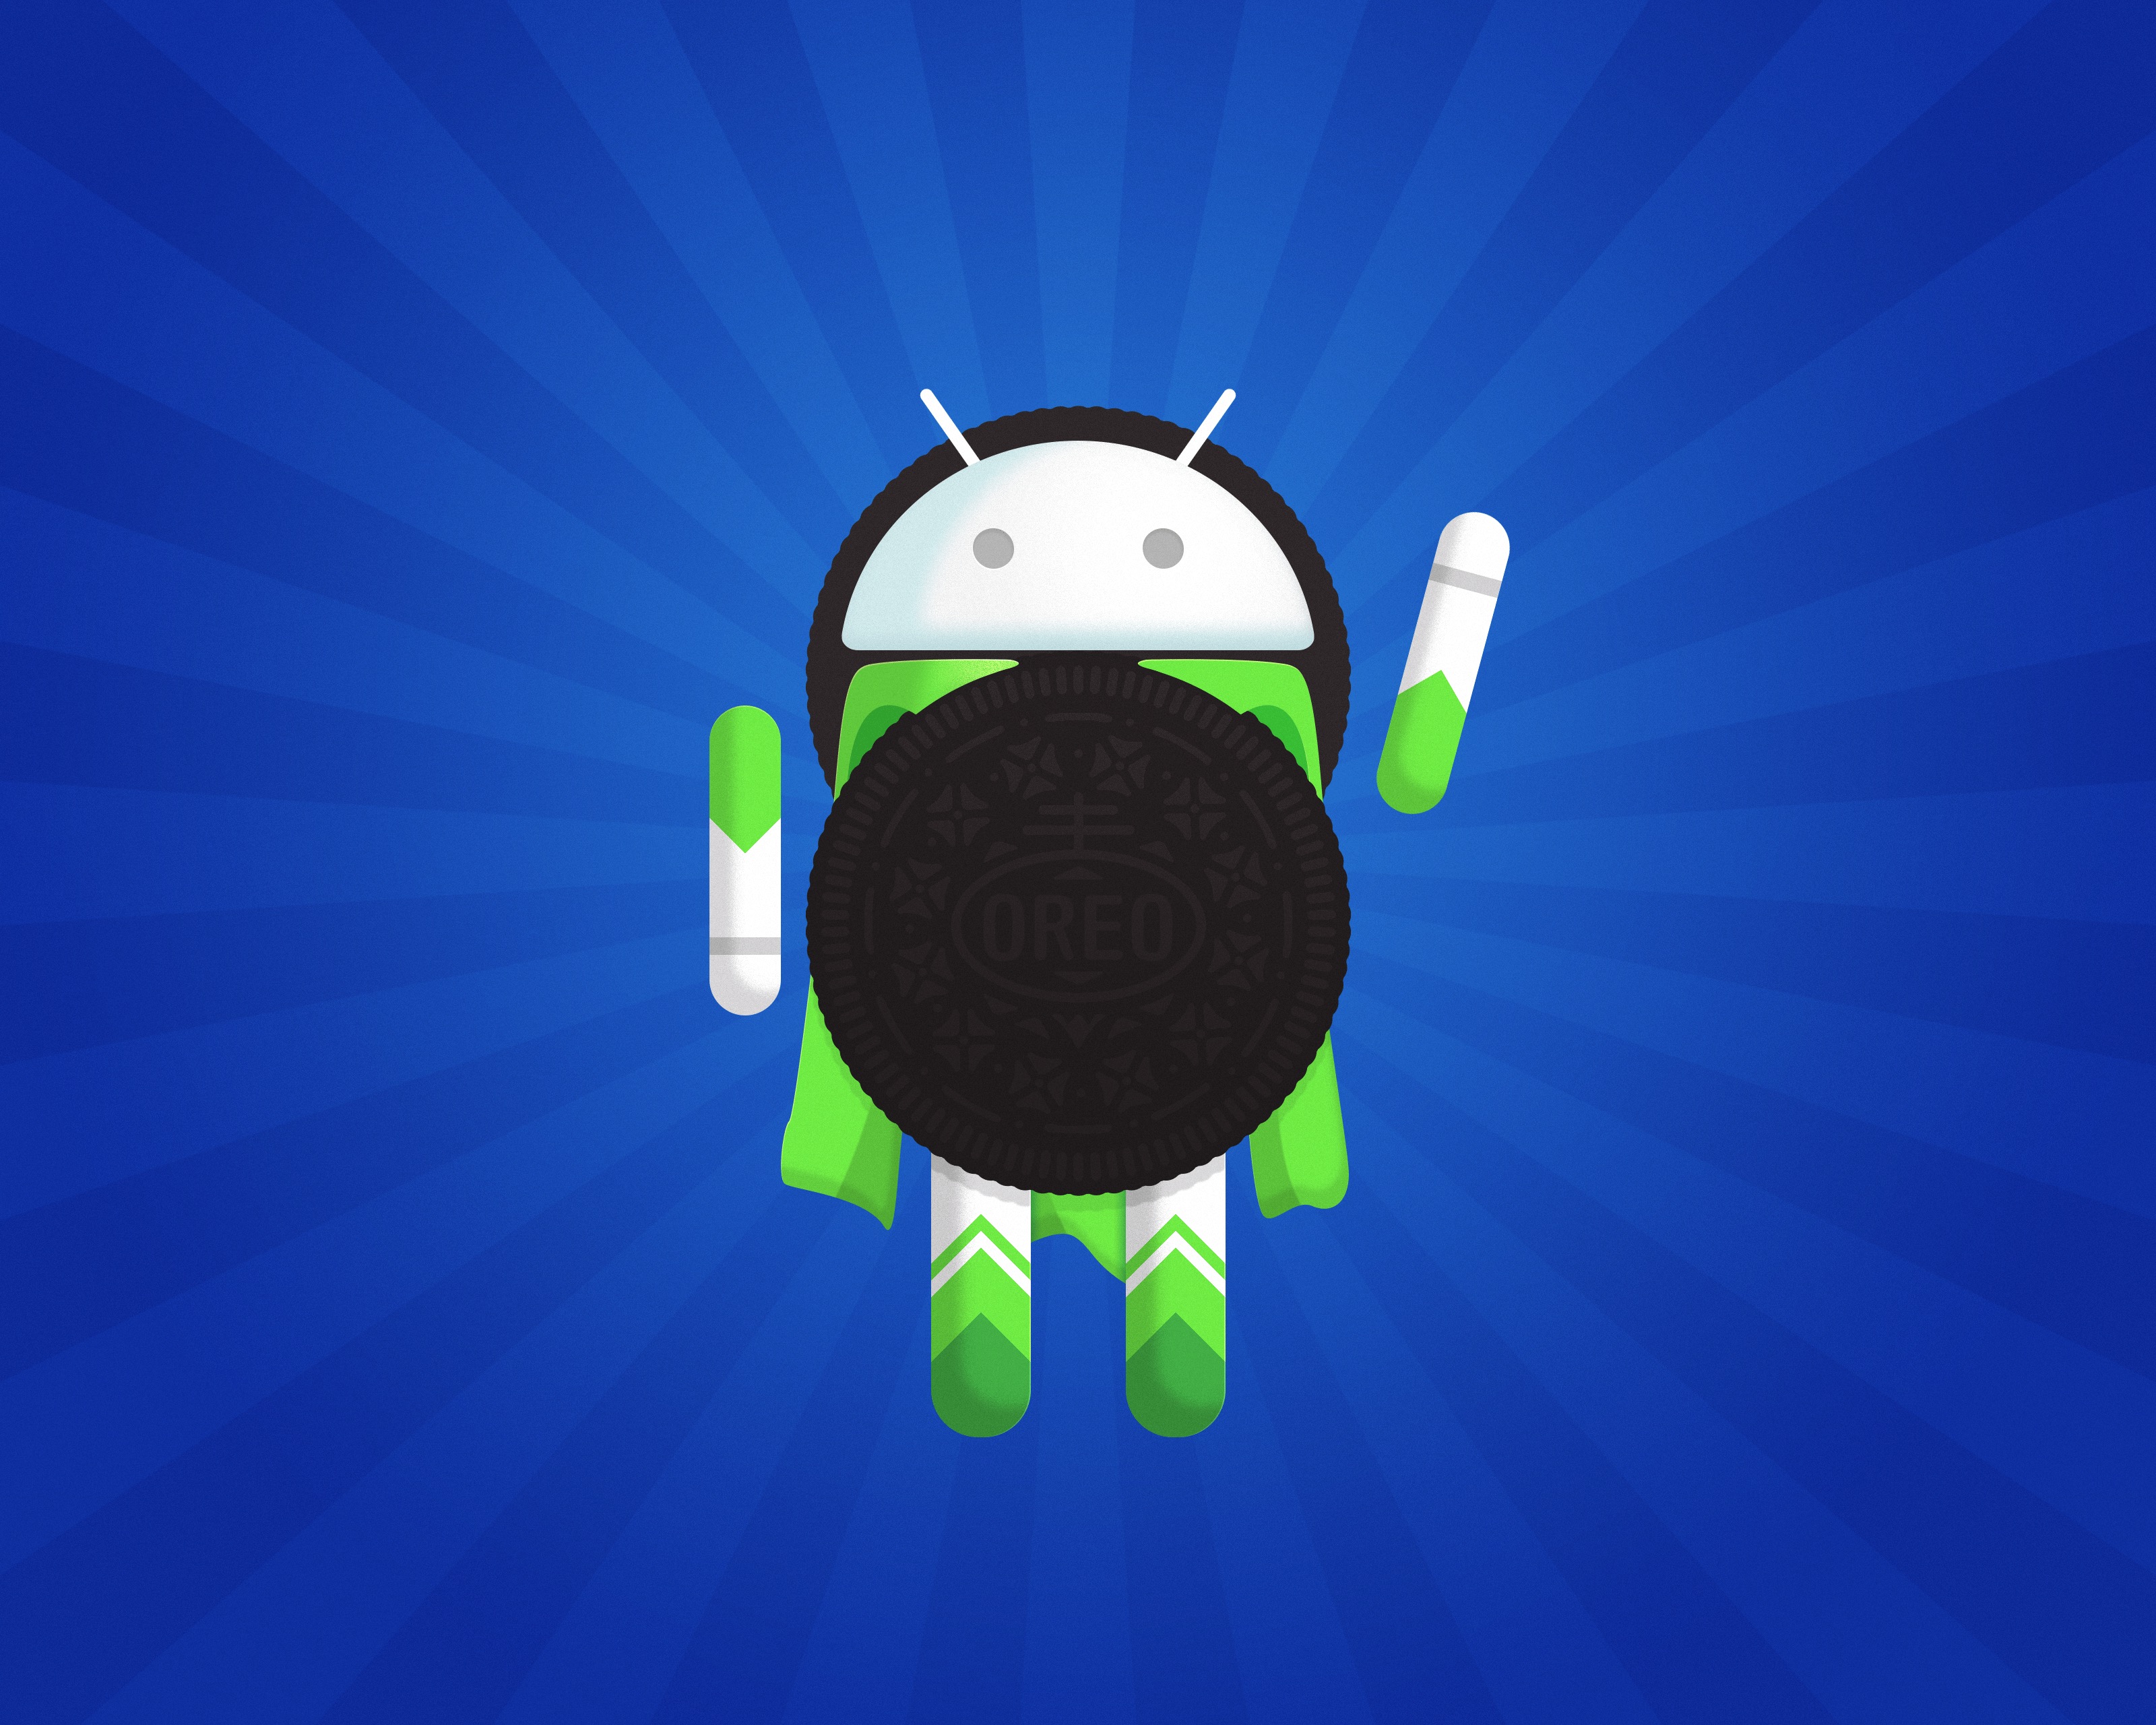 Новый android 8. Android 8.0 Oreo. Орео Android. Android Oreo операционные системы Android. Oreo Android логотип.